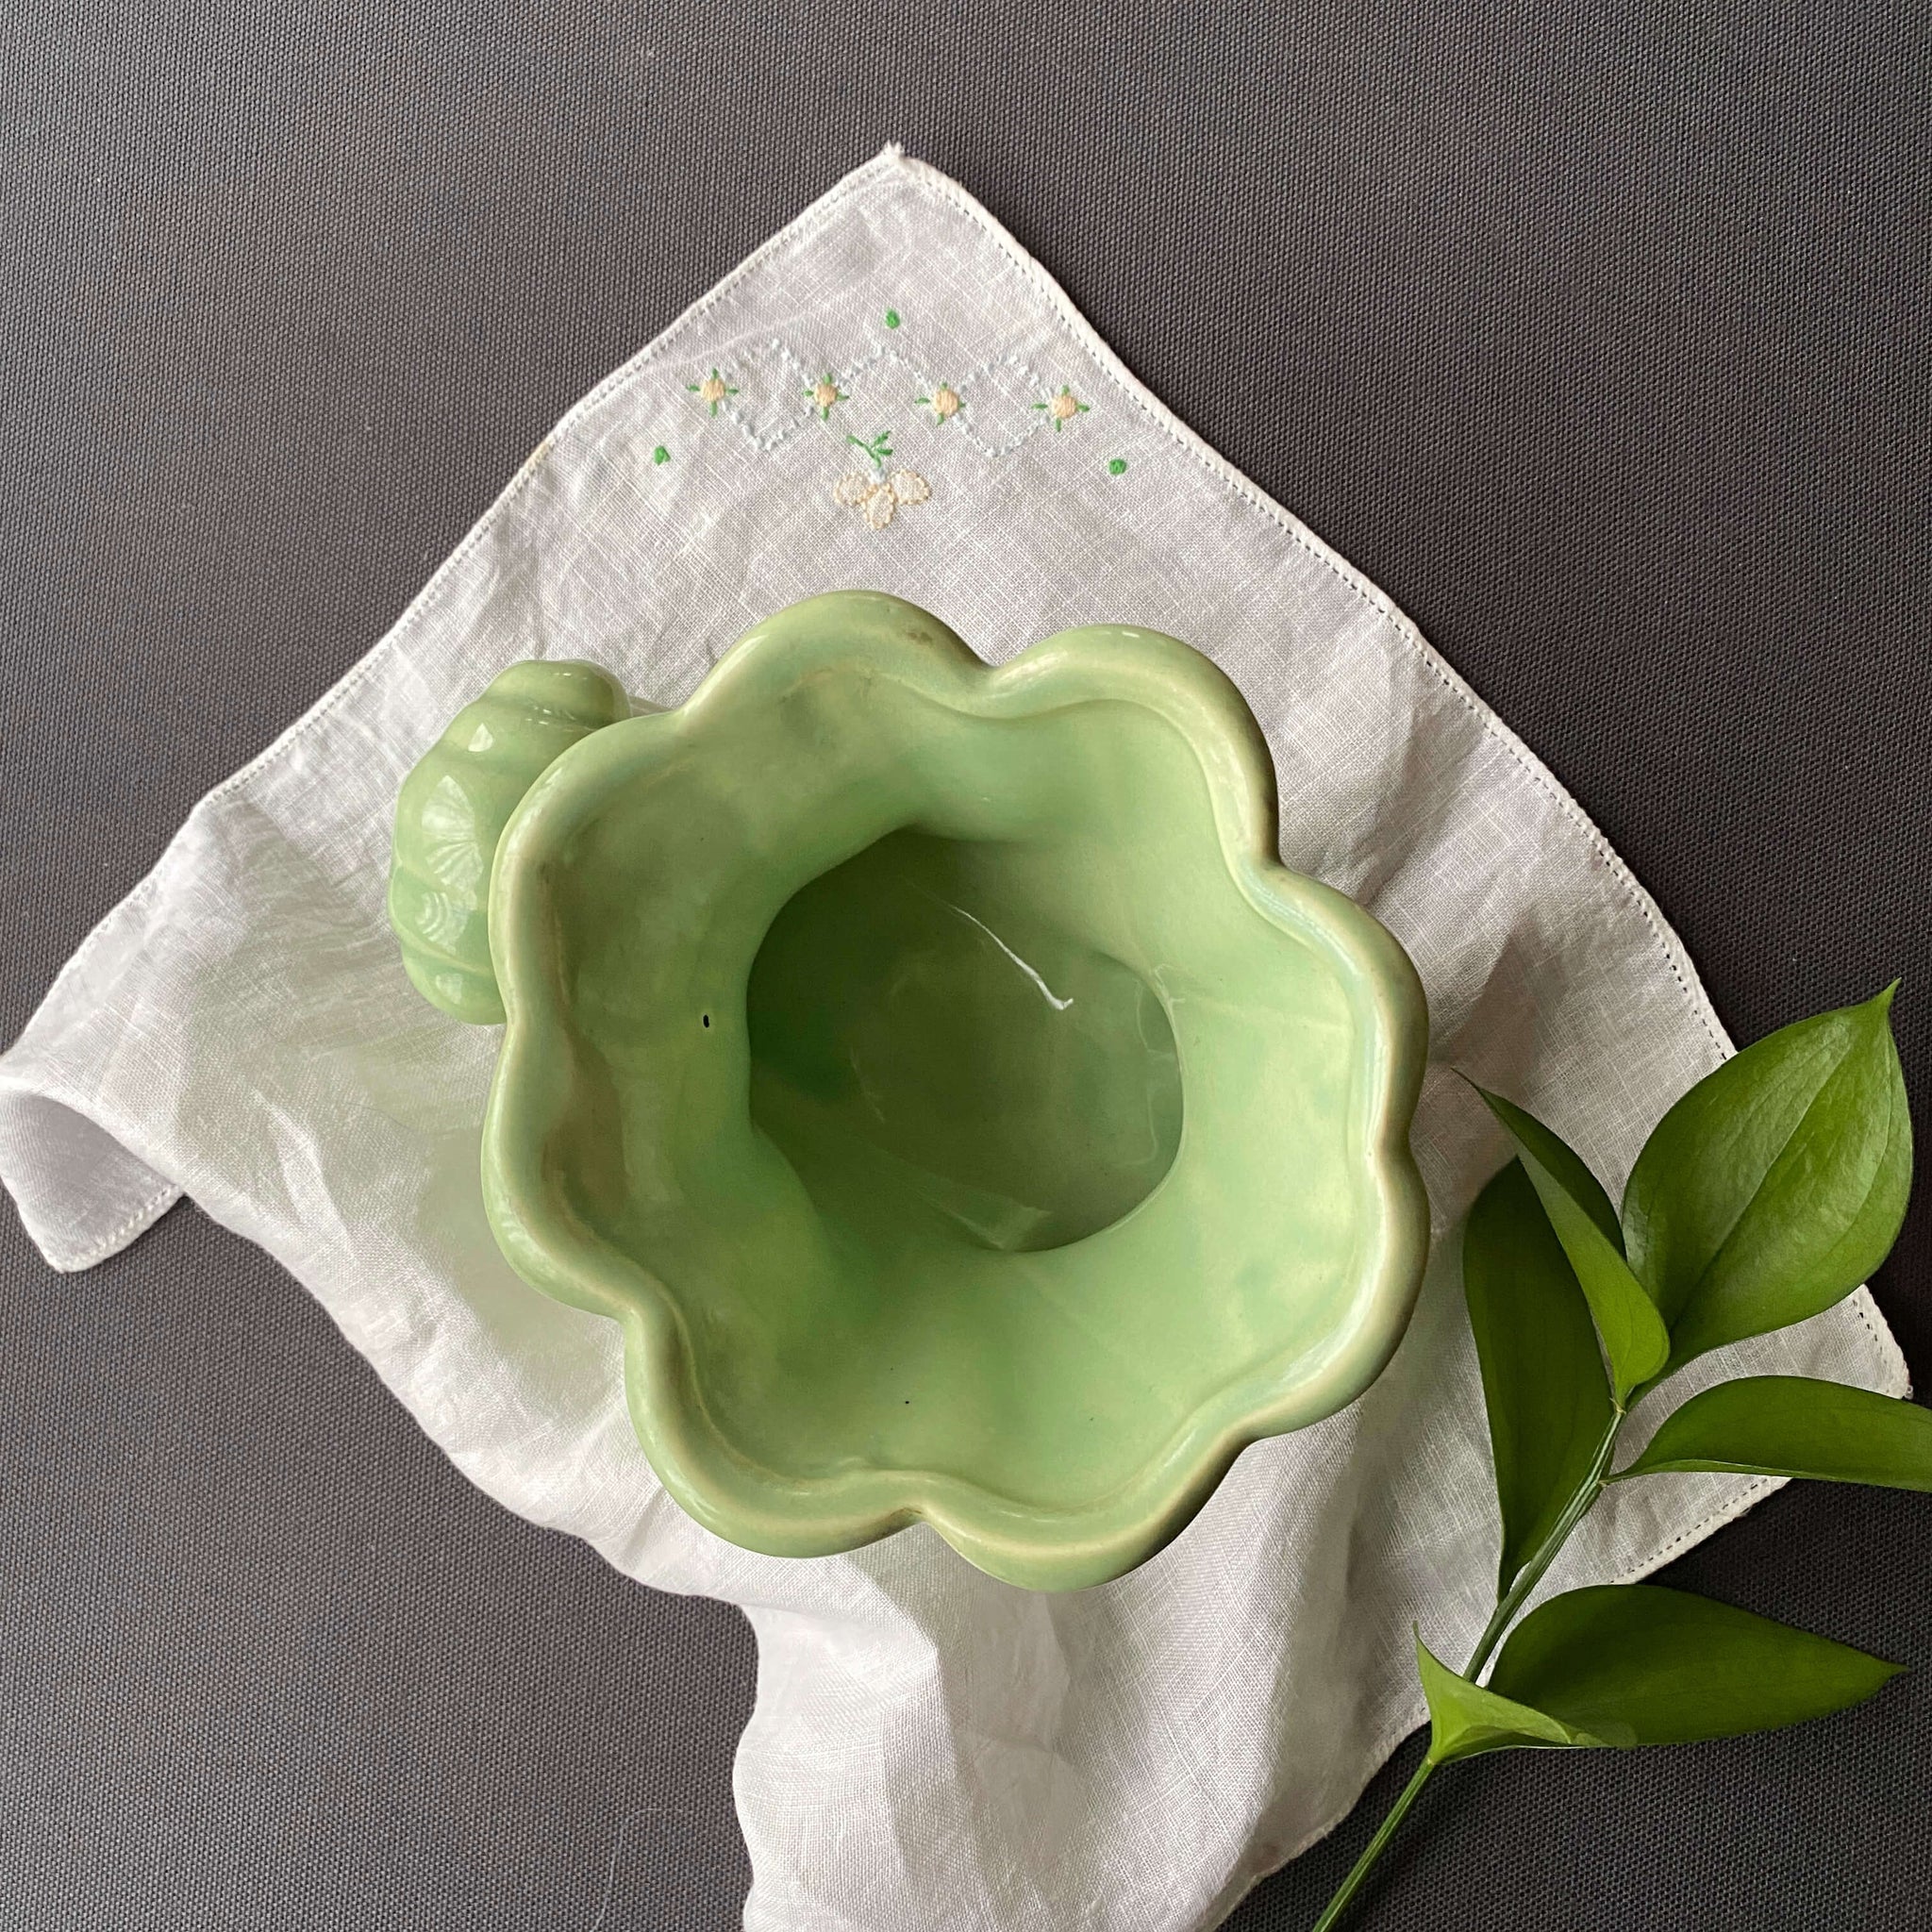 Vintage Midcentury Green Planter Vase - Cornucopia Horn of Plenty Wave